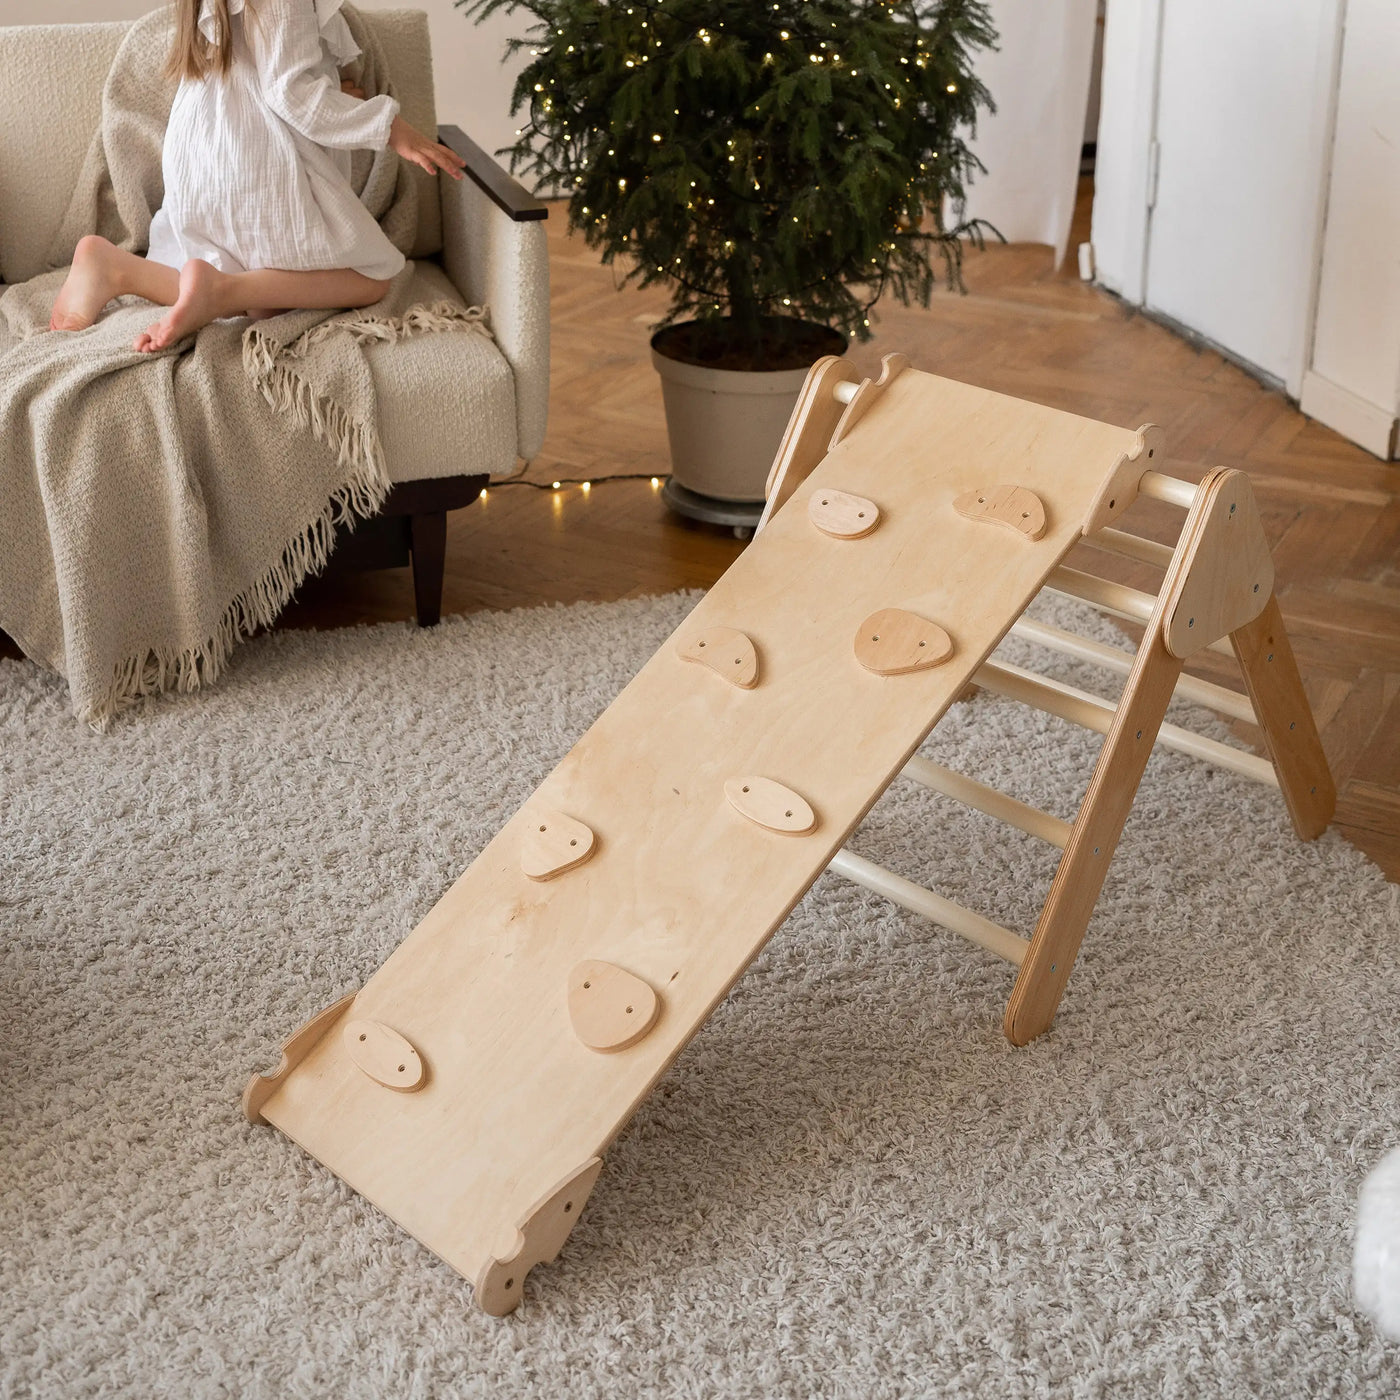 Find #1 Selling Medium Handmade Wooden Pikler Triangle for Kids 5